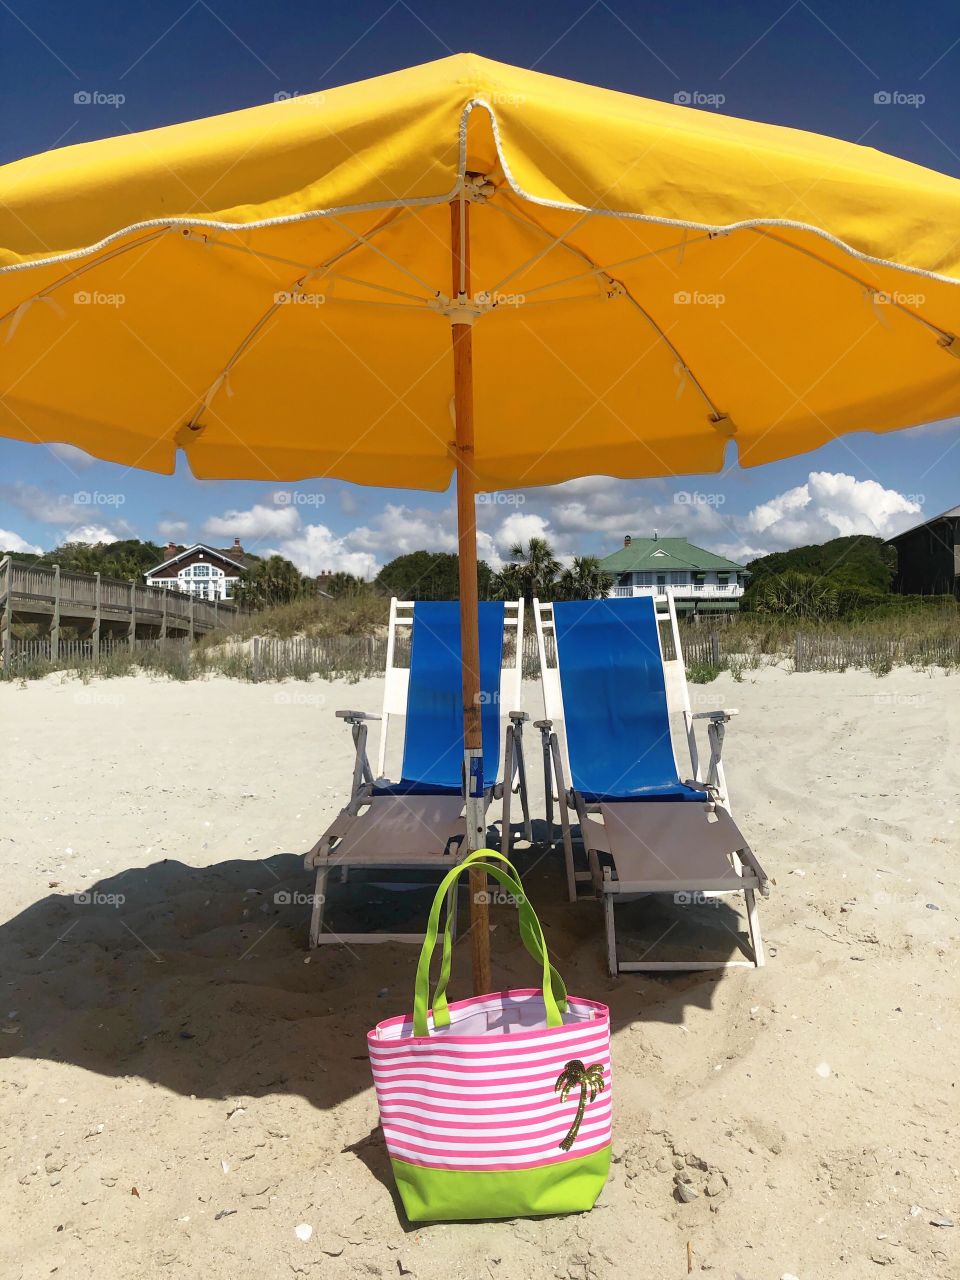 Beach umbrella and chairs at the seashore. 